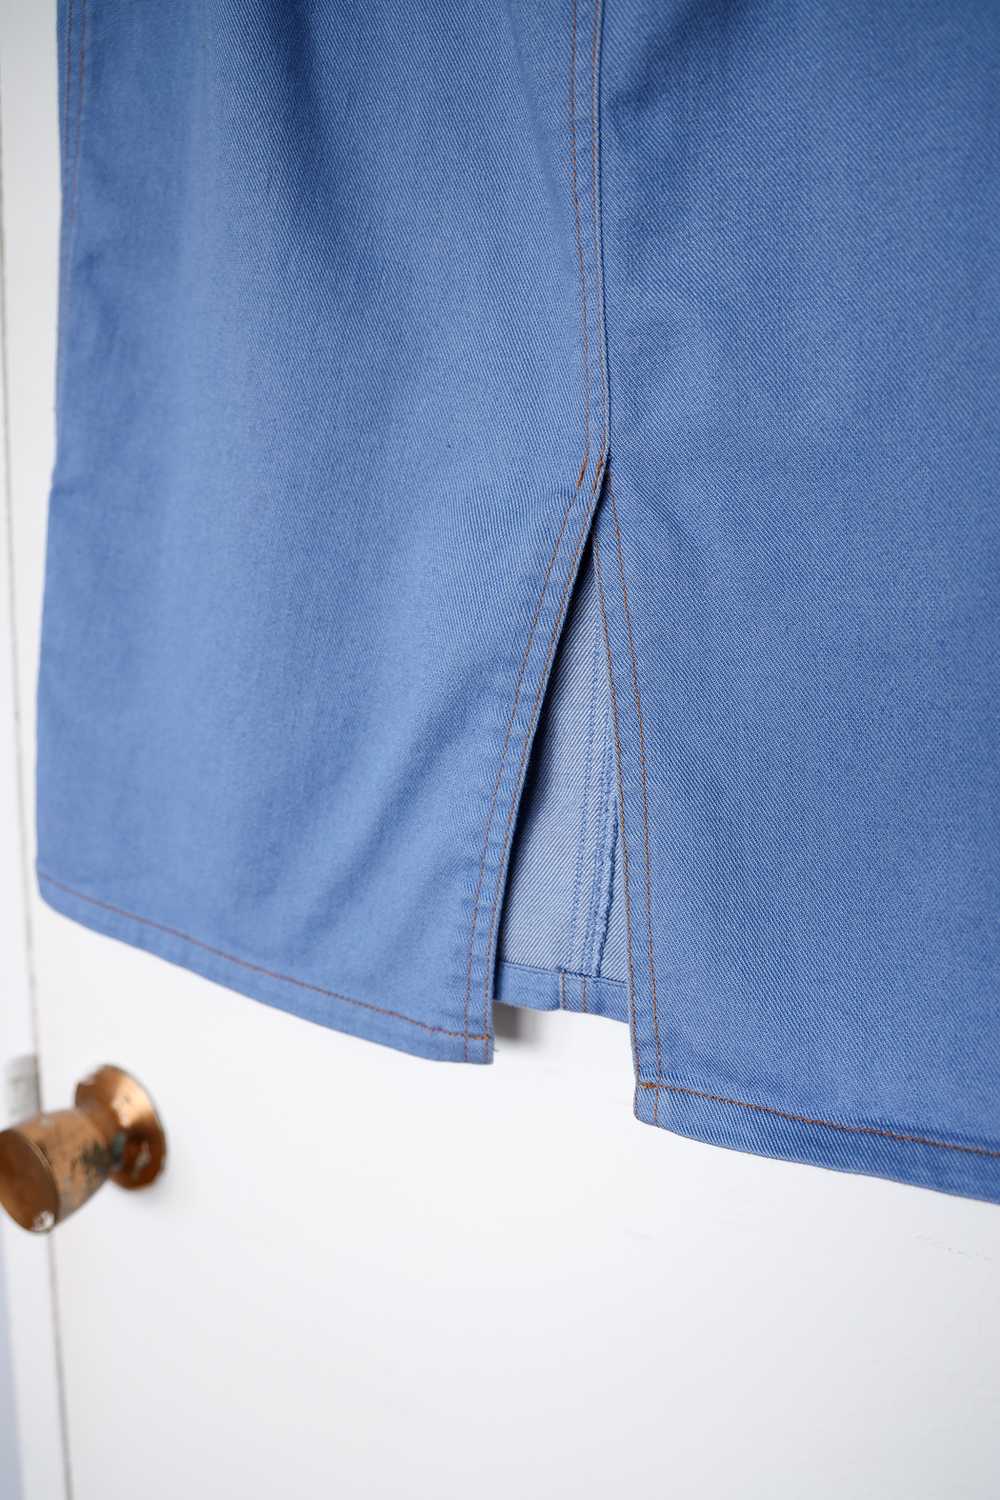 Cornflower Blue Pencil Skirt / Size 8 - image 9